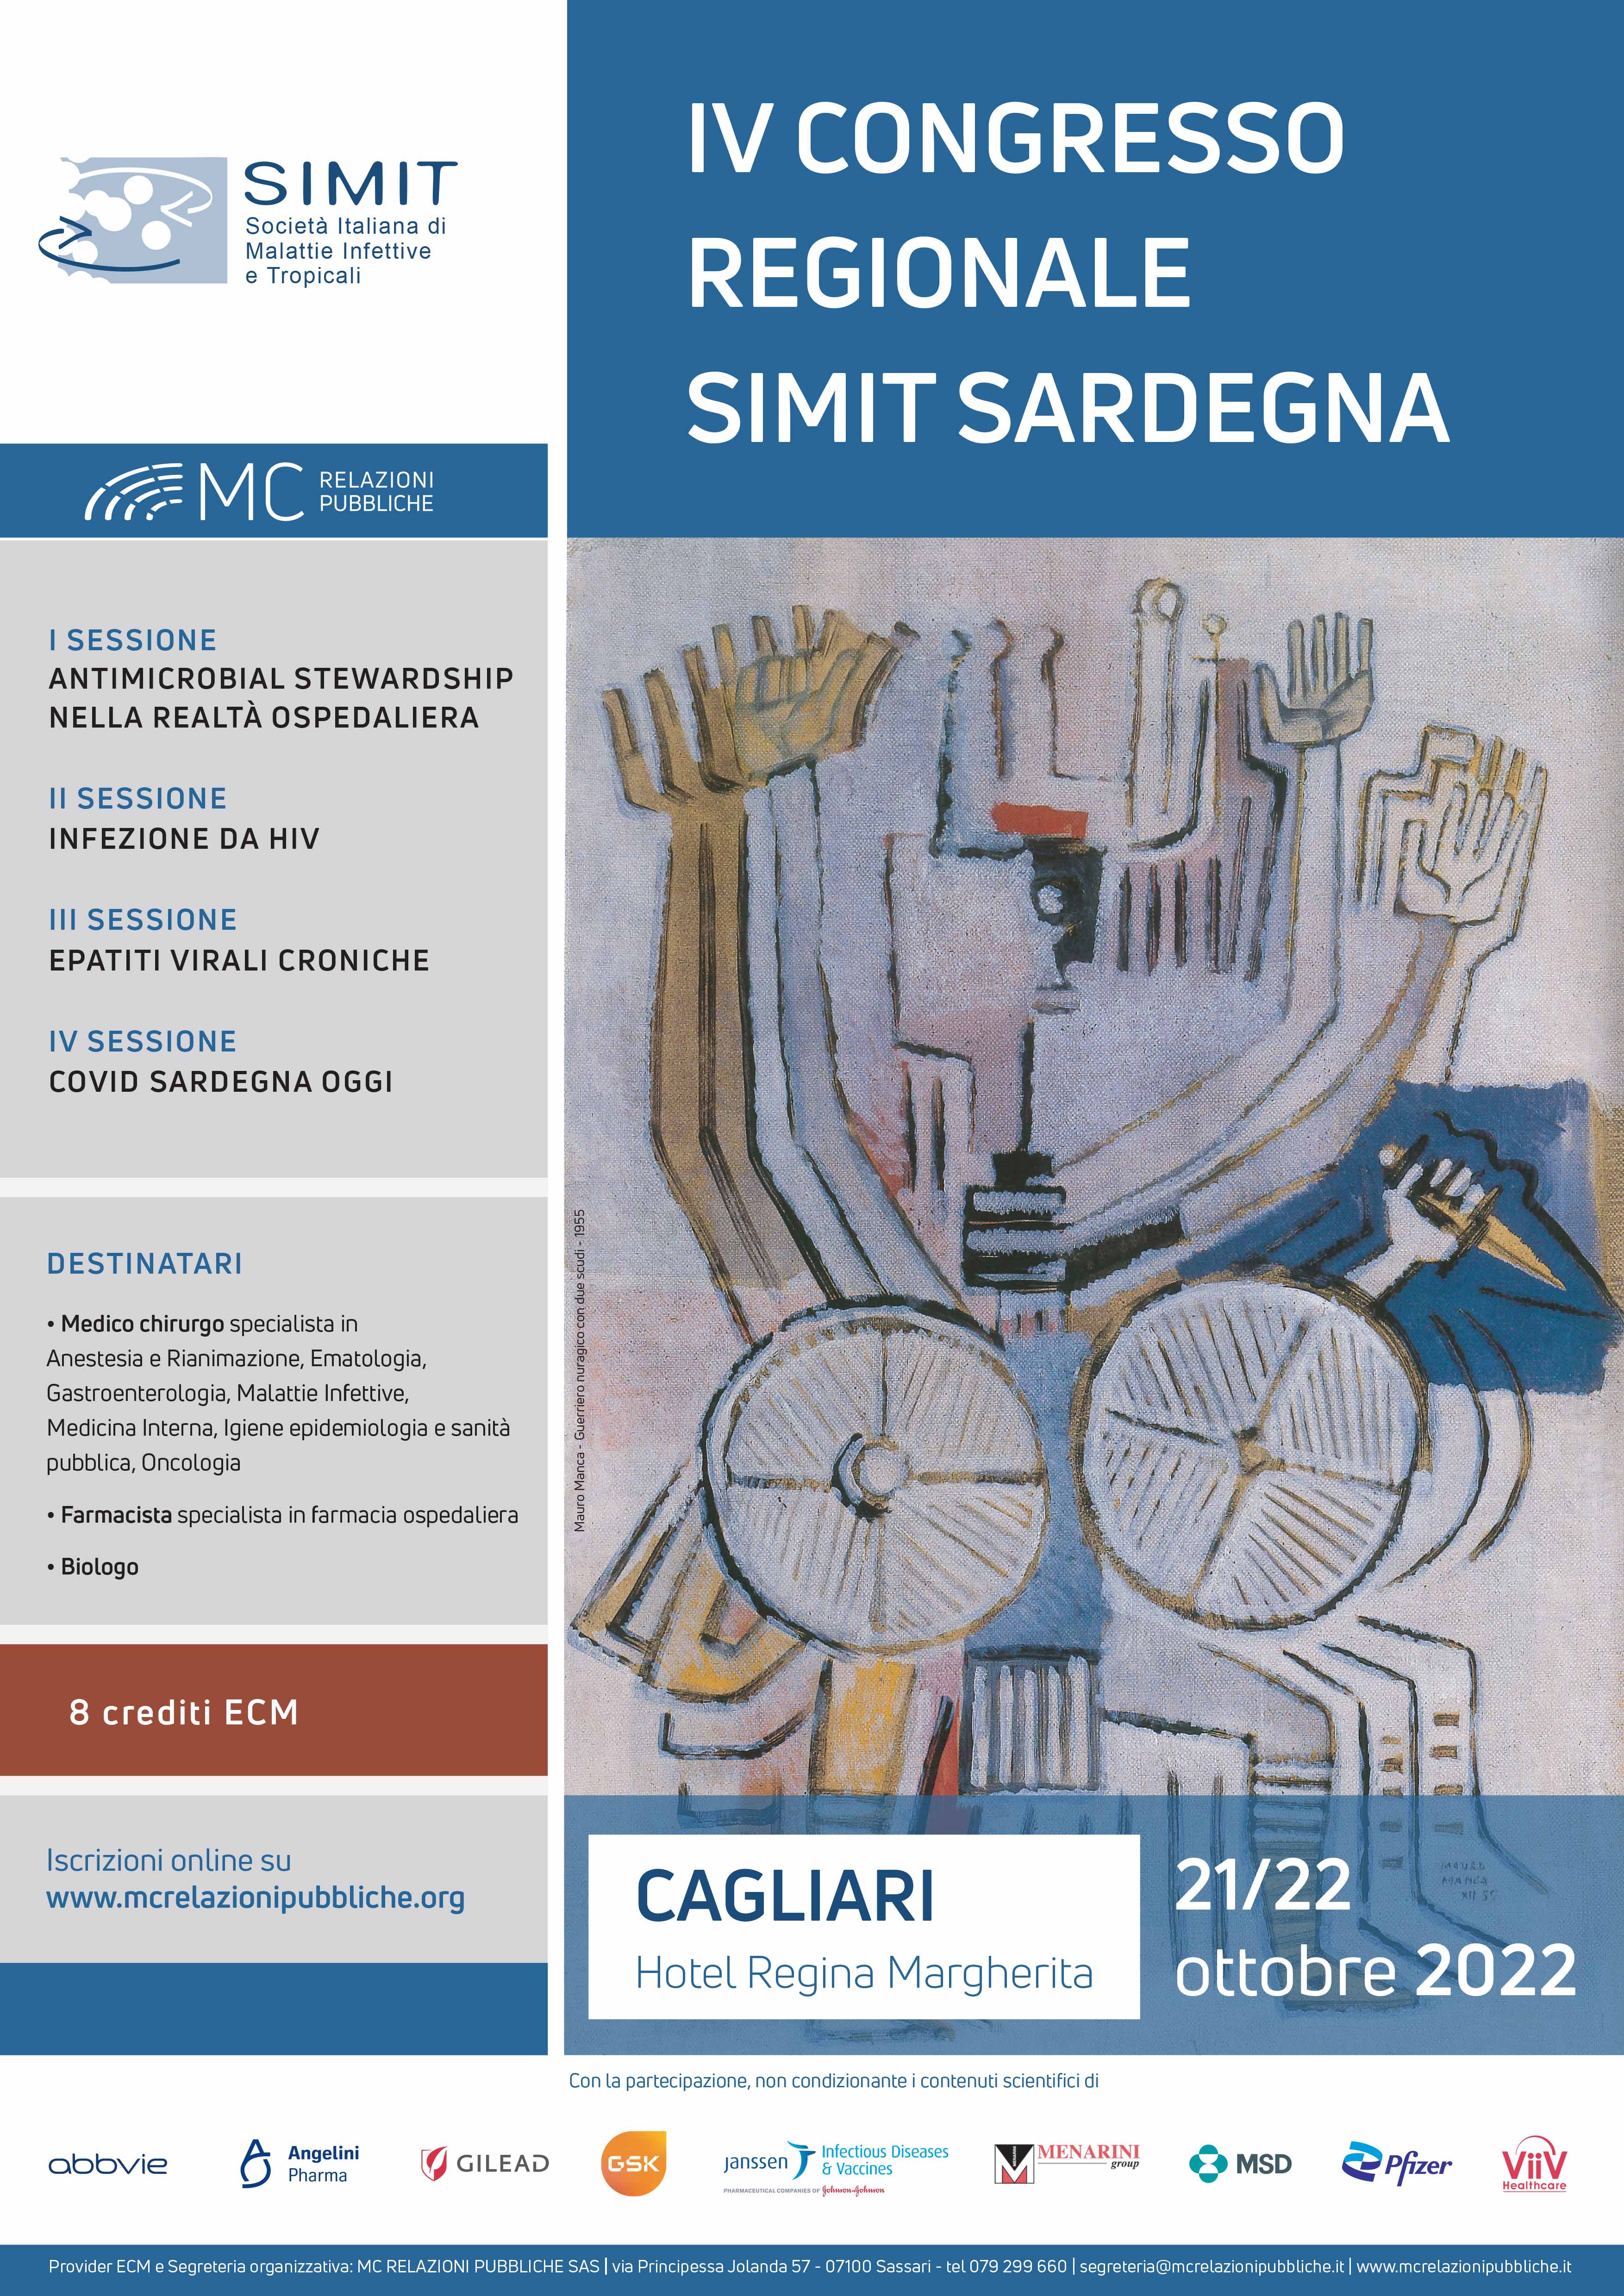 IV Congresso Regionale SIMIT Sardegna - 21/22 ottobre 2022